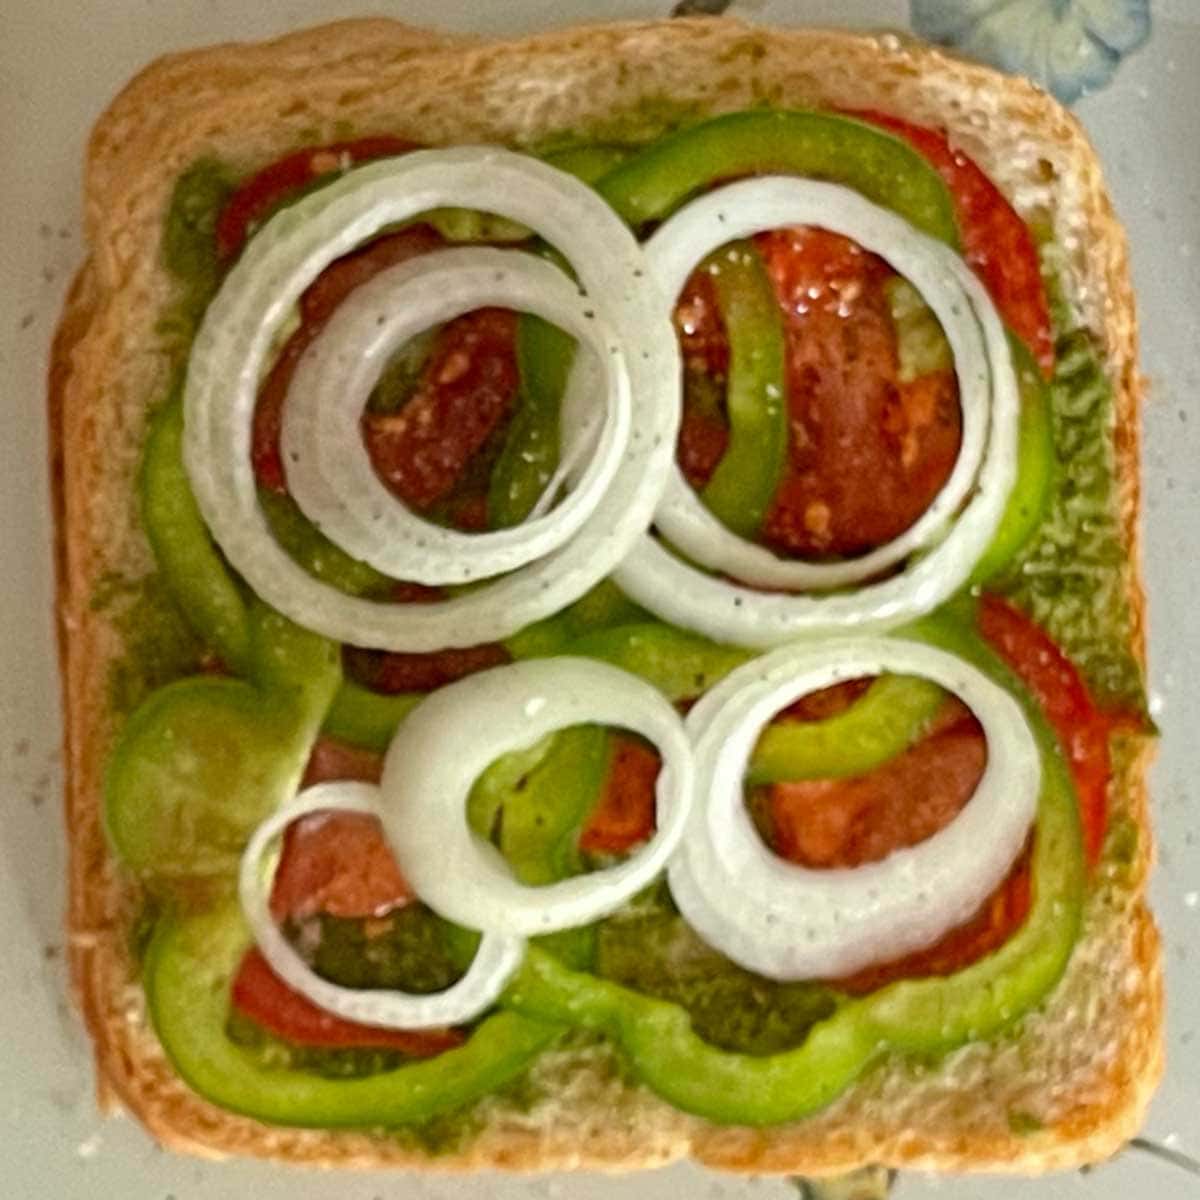 Mumbai sandwich layered with cut vegetables.